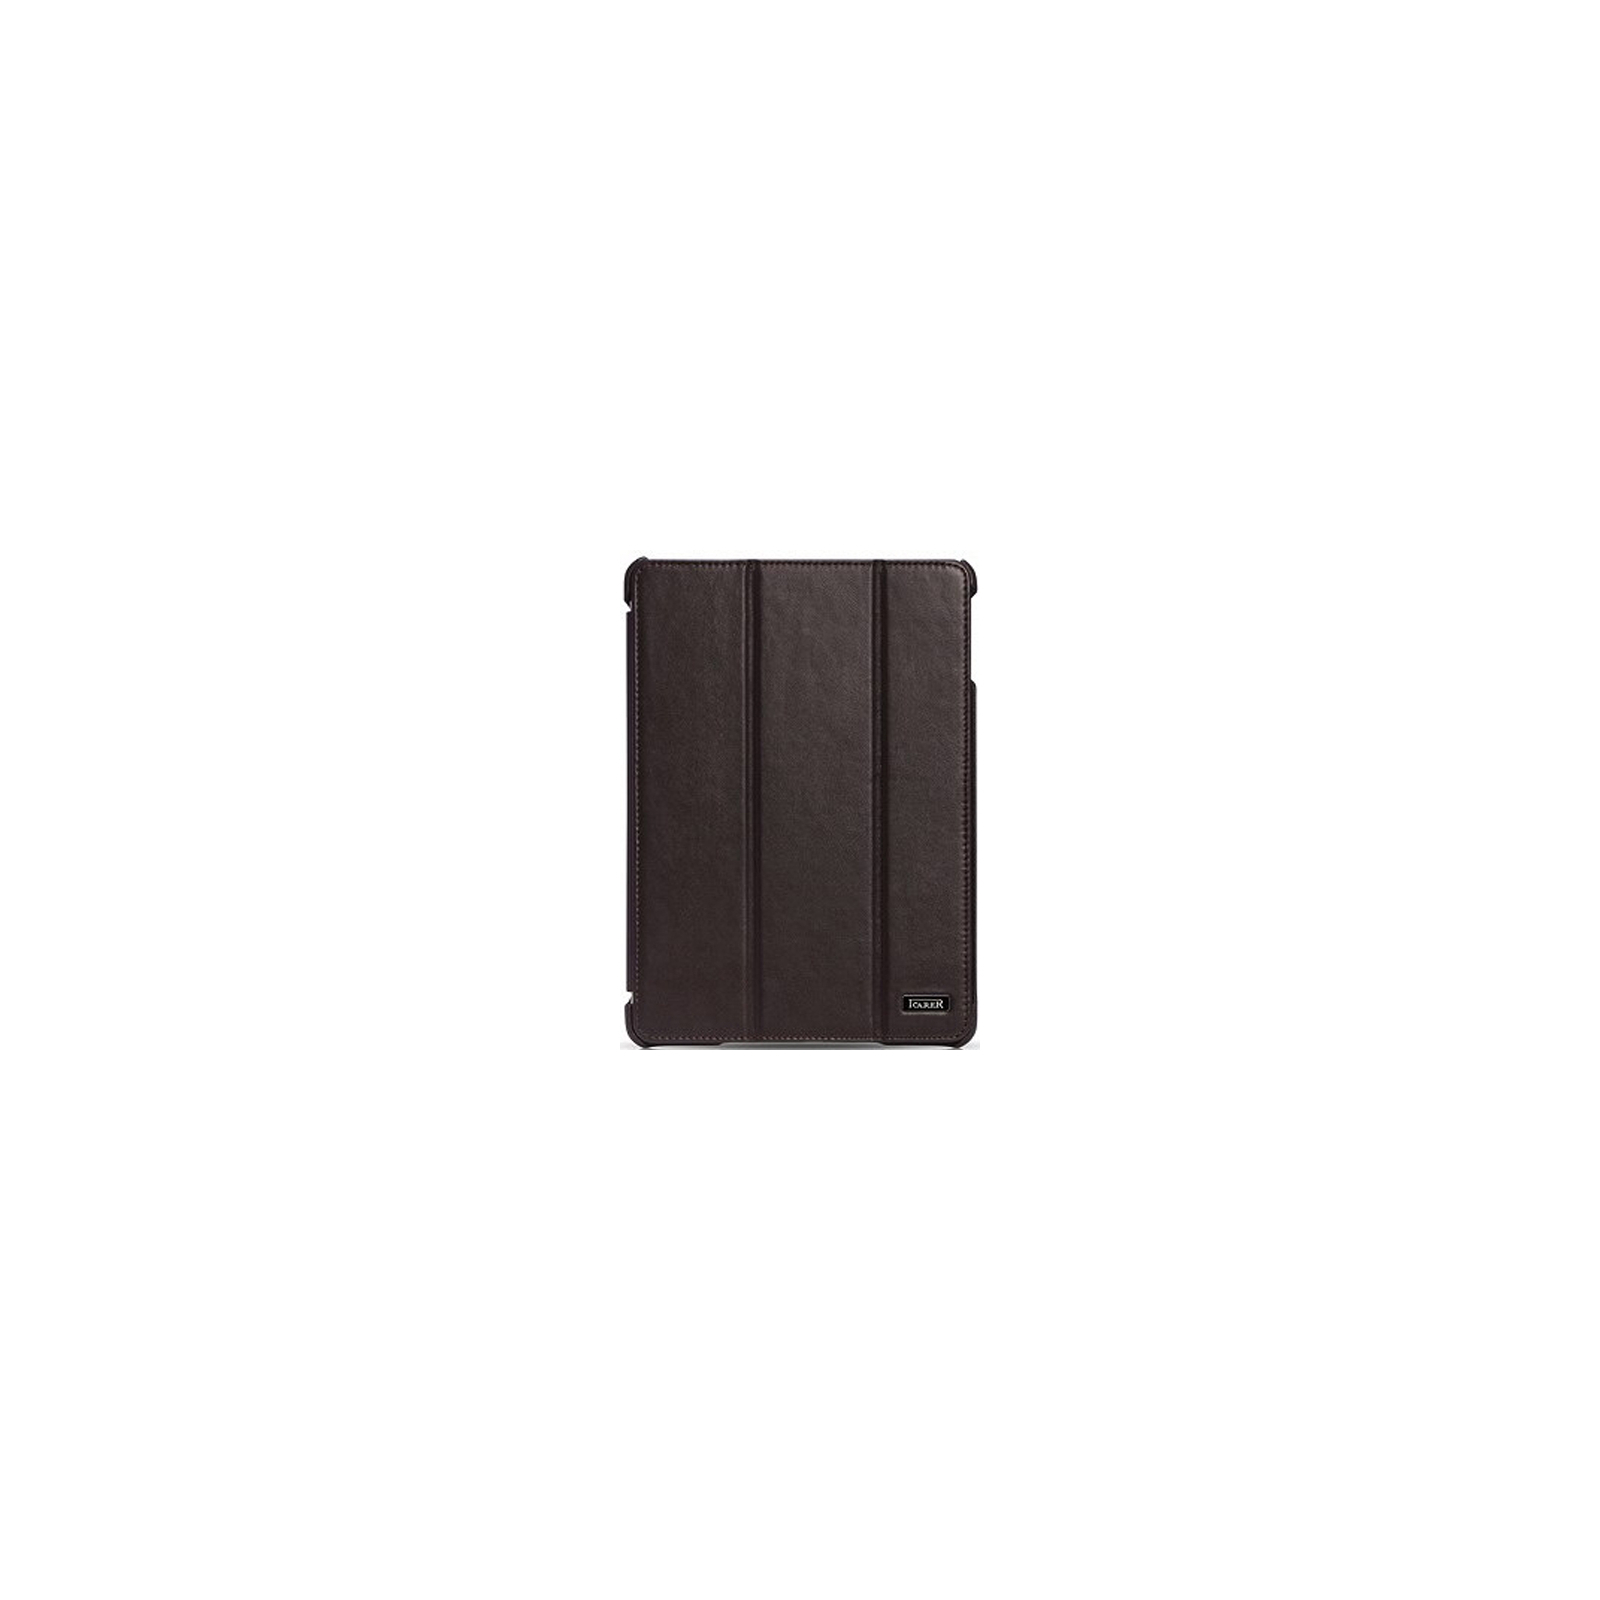 Чехол для планшета i-Carer iPad Mini Retina Ultra thin genuine leather series black (RID794bl)